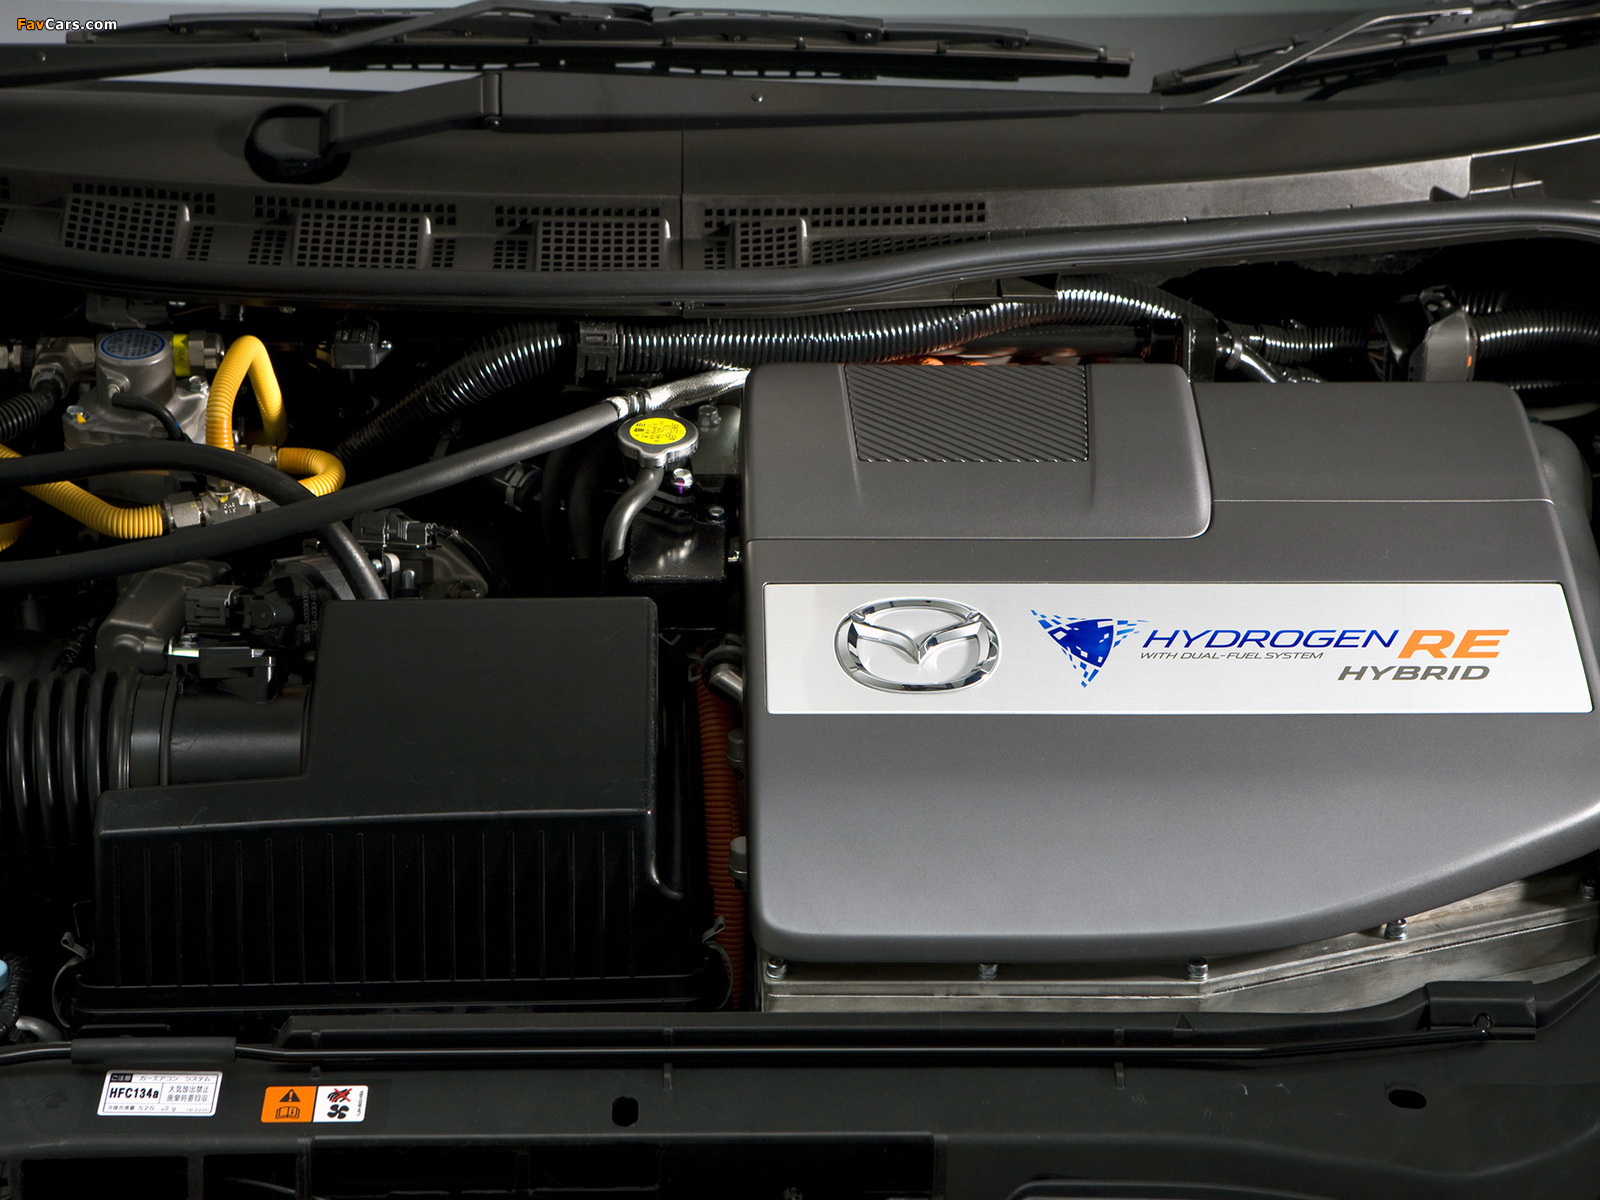 Mazda Premacy Hydrogen RE 2009 photos (1600 x 1200)